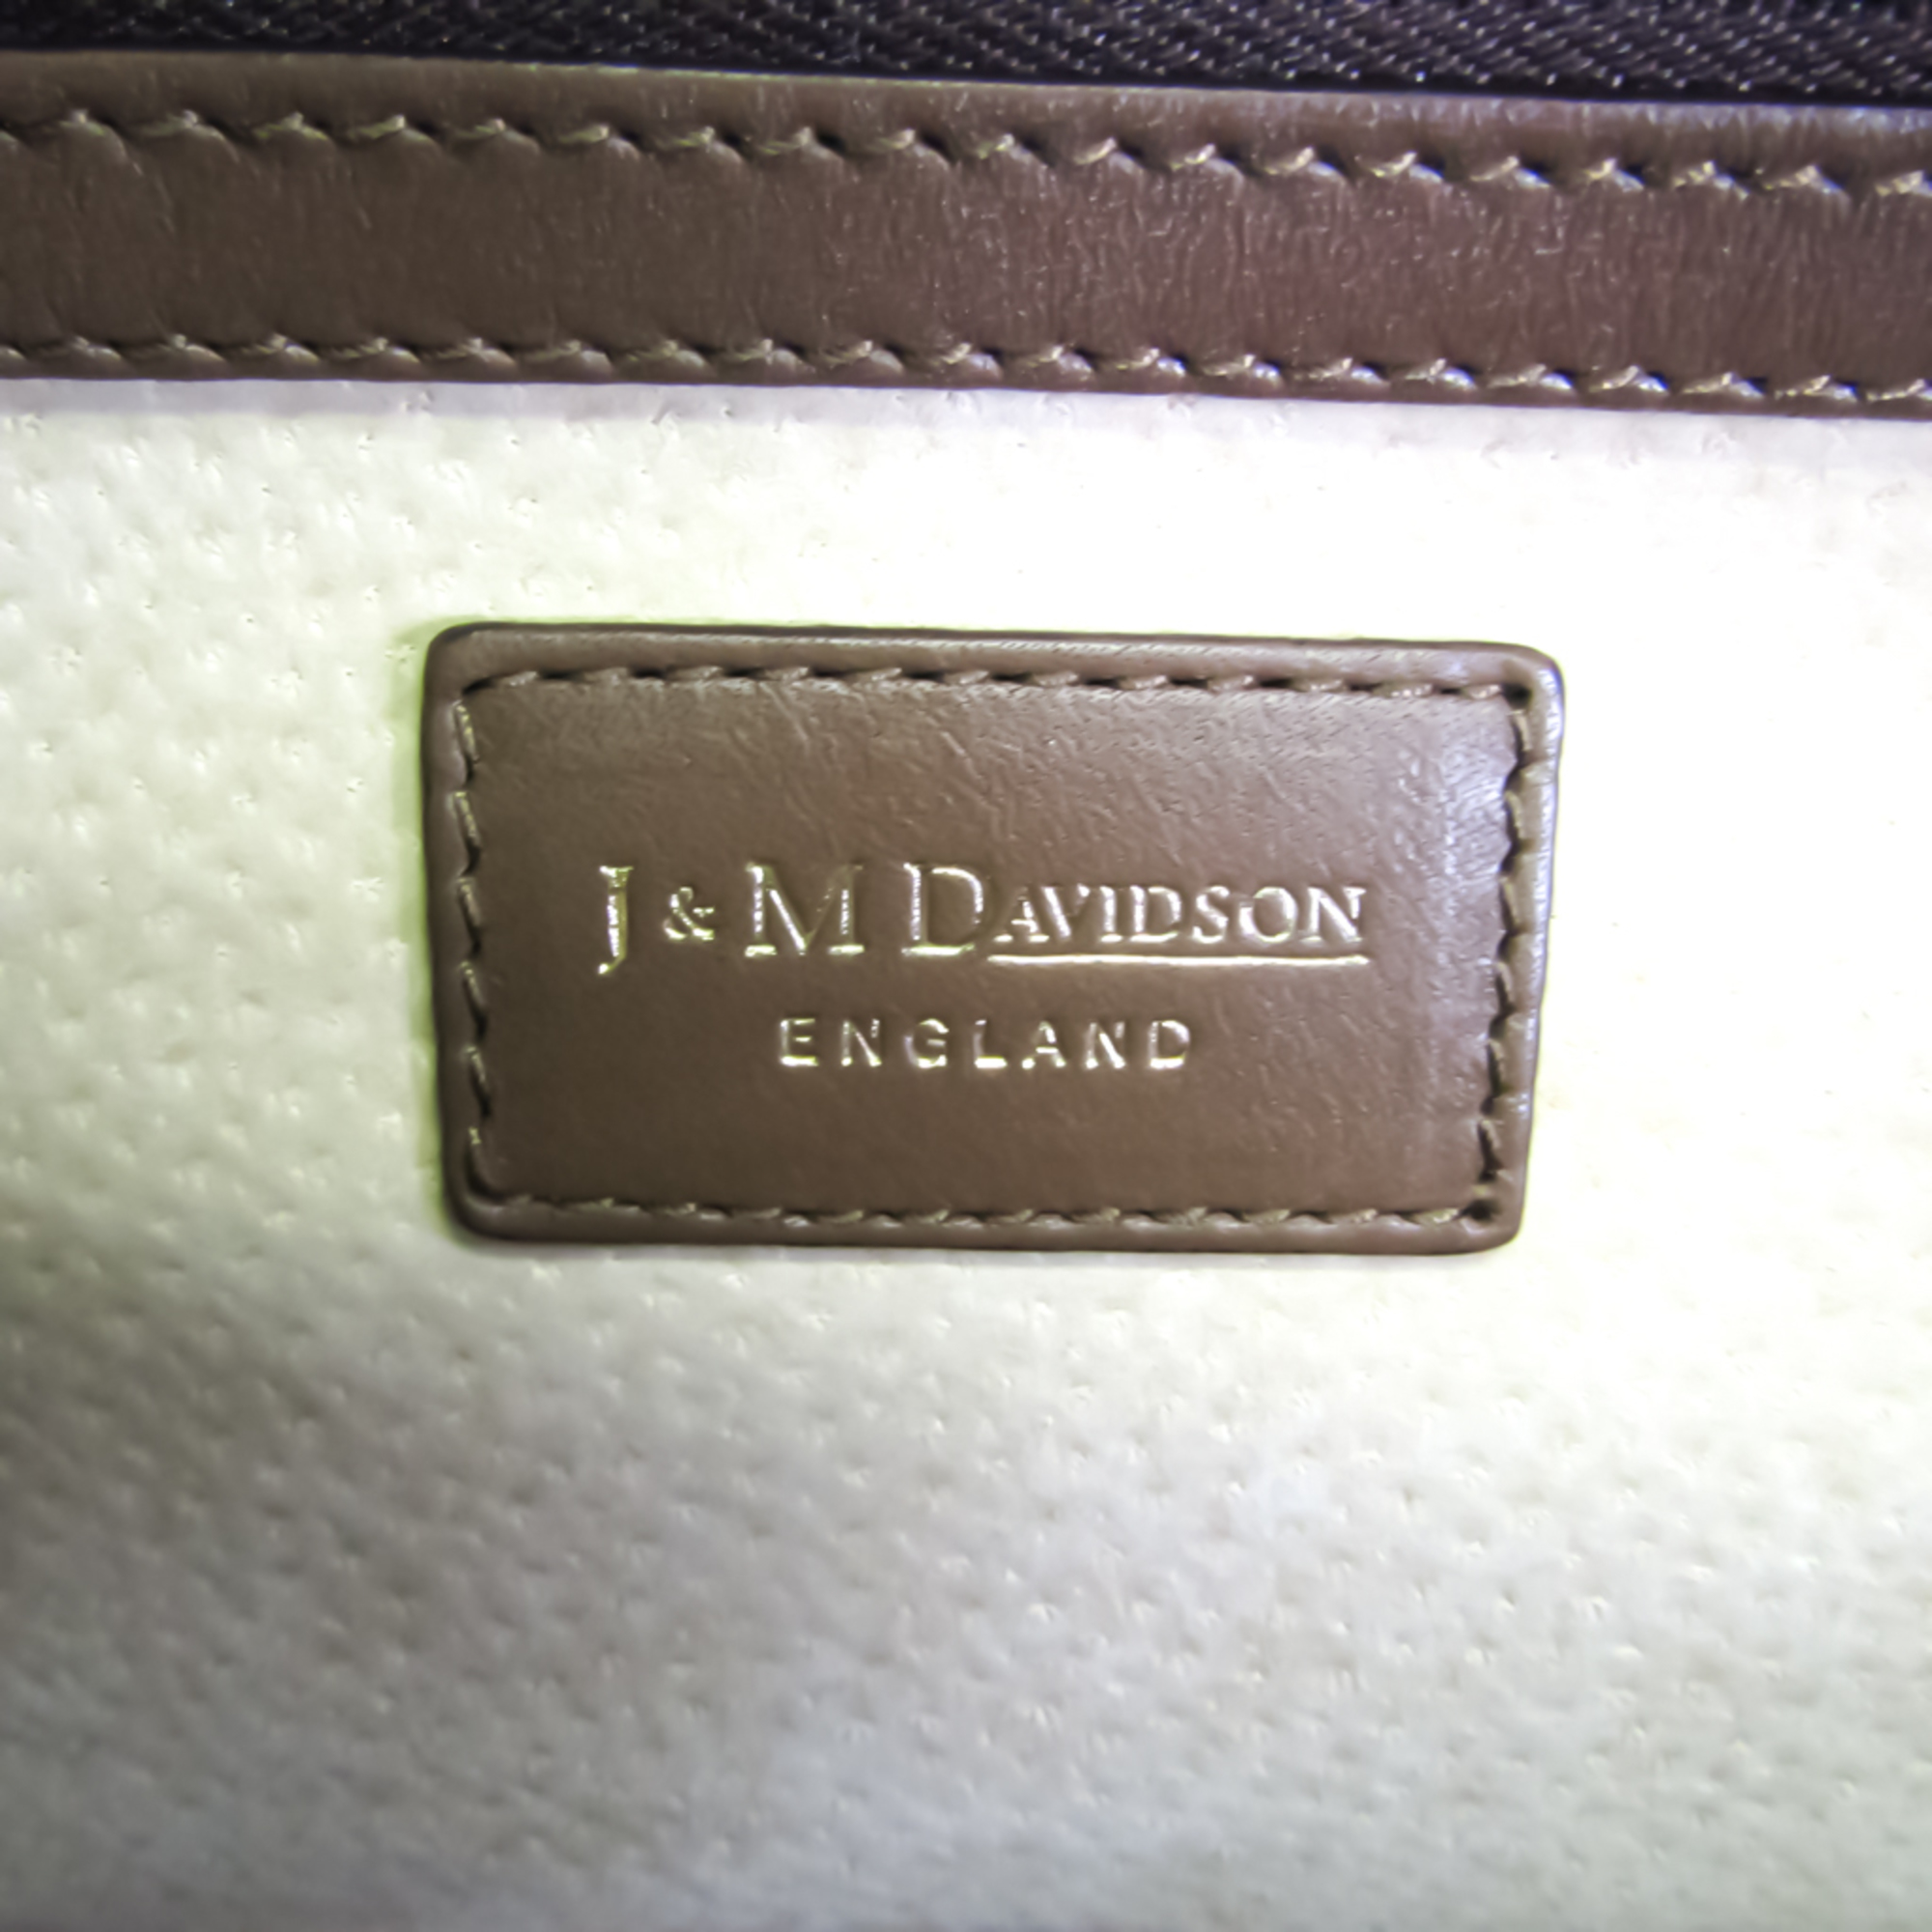 J&M Davidson Vivi Women's Suede,Leather Boston Bag Beige,Brown